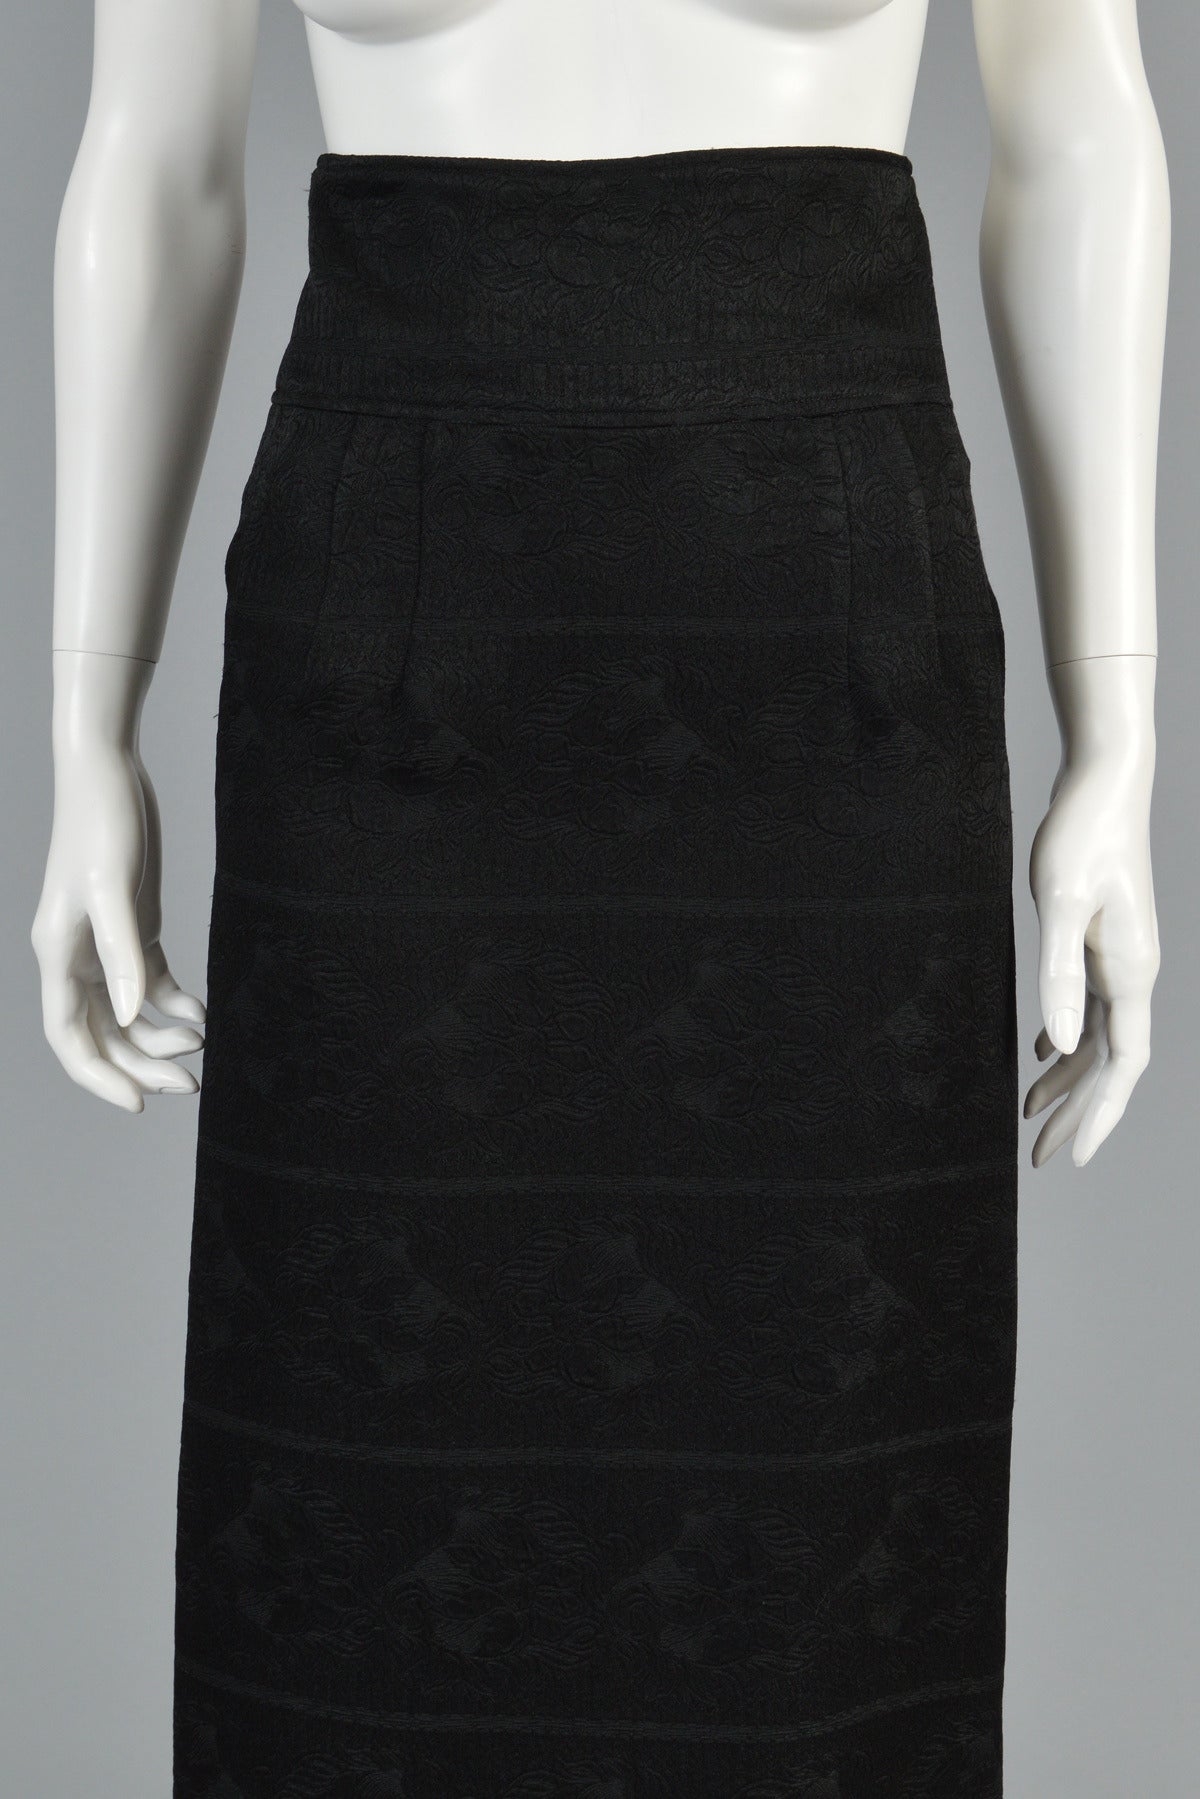 Women's 1980s Matsuda Ultra High Waisted Button Back Skirt For Sale